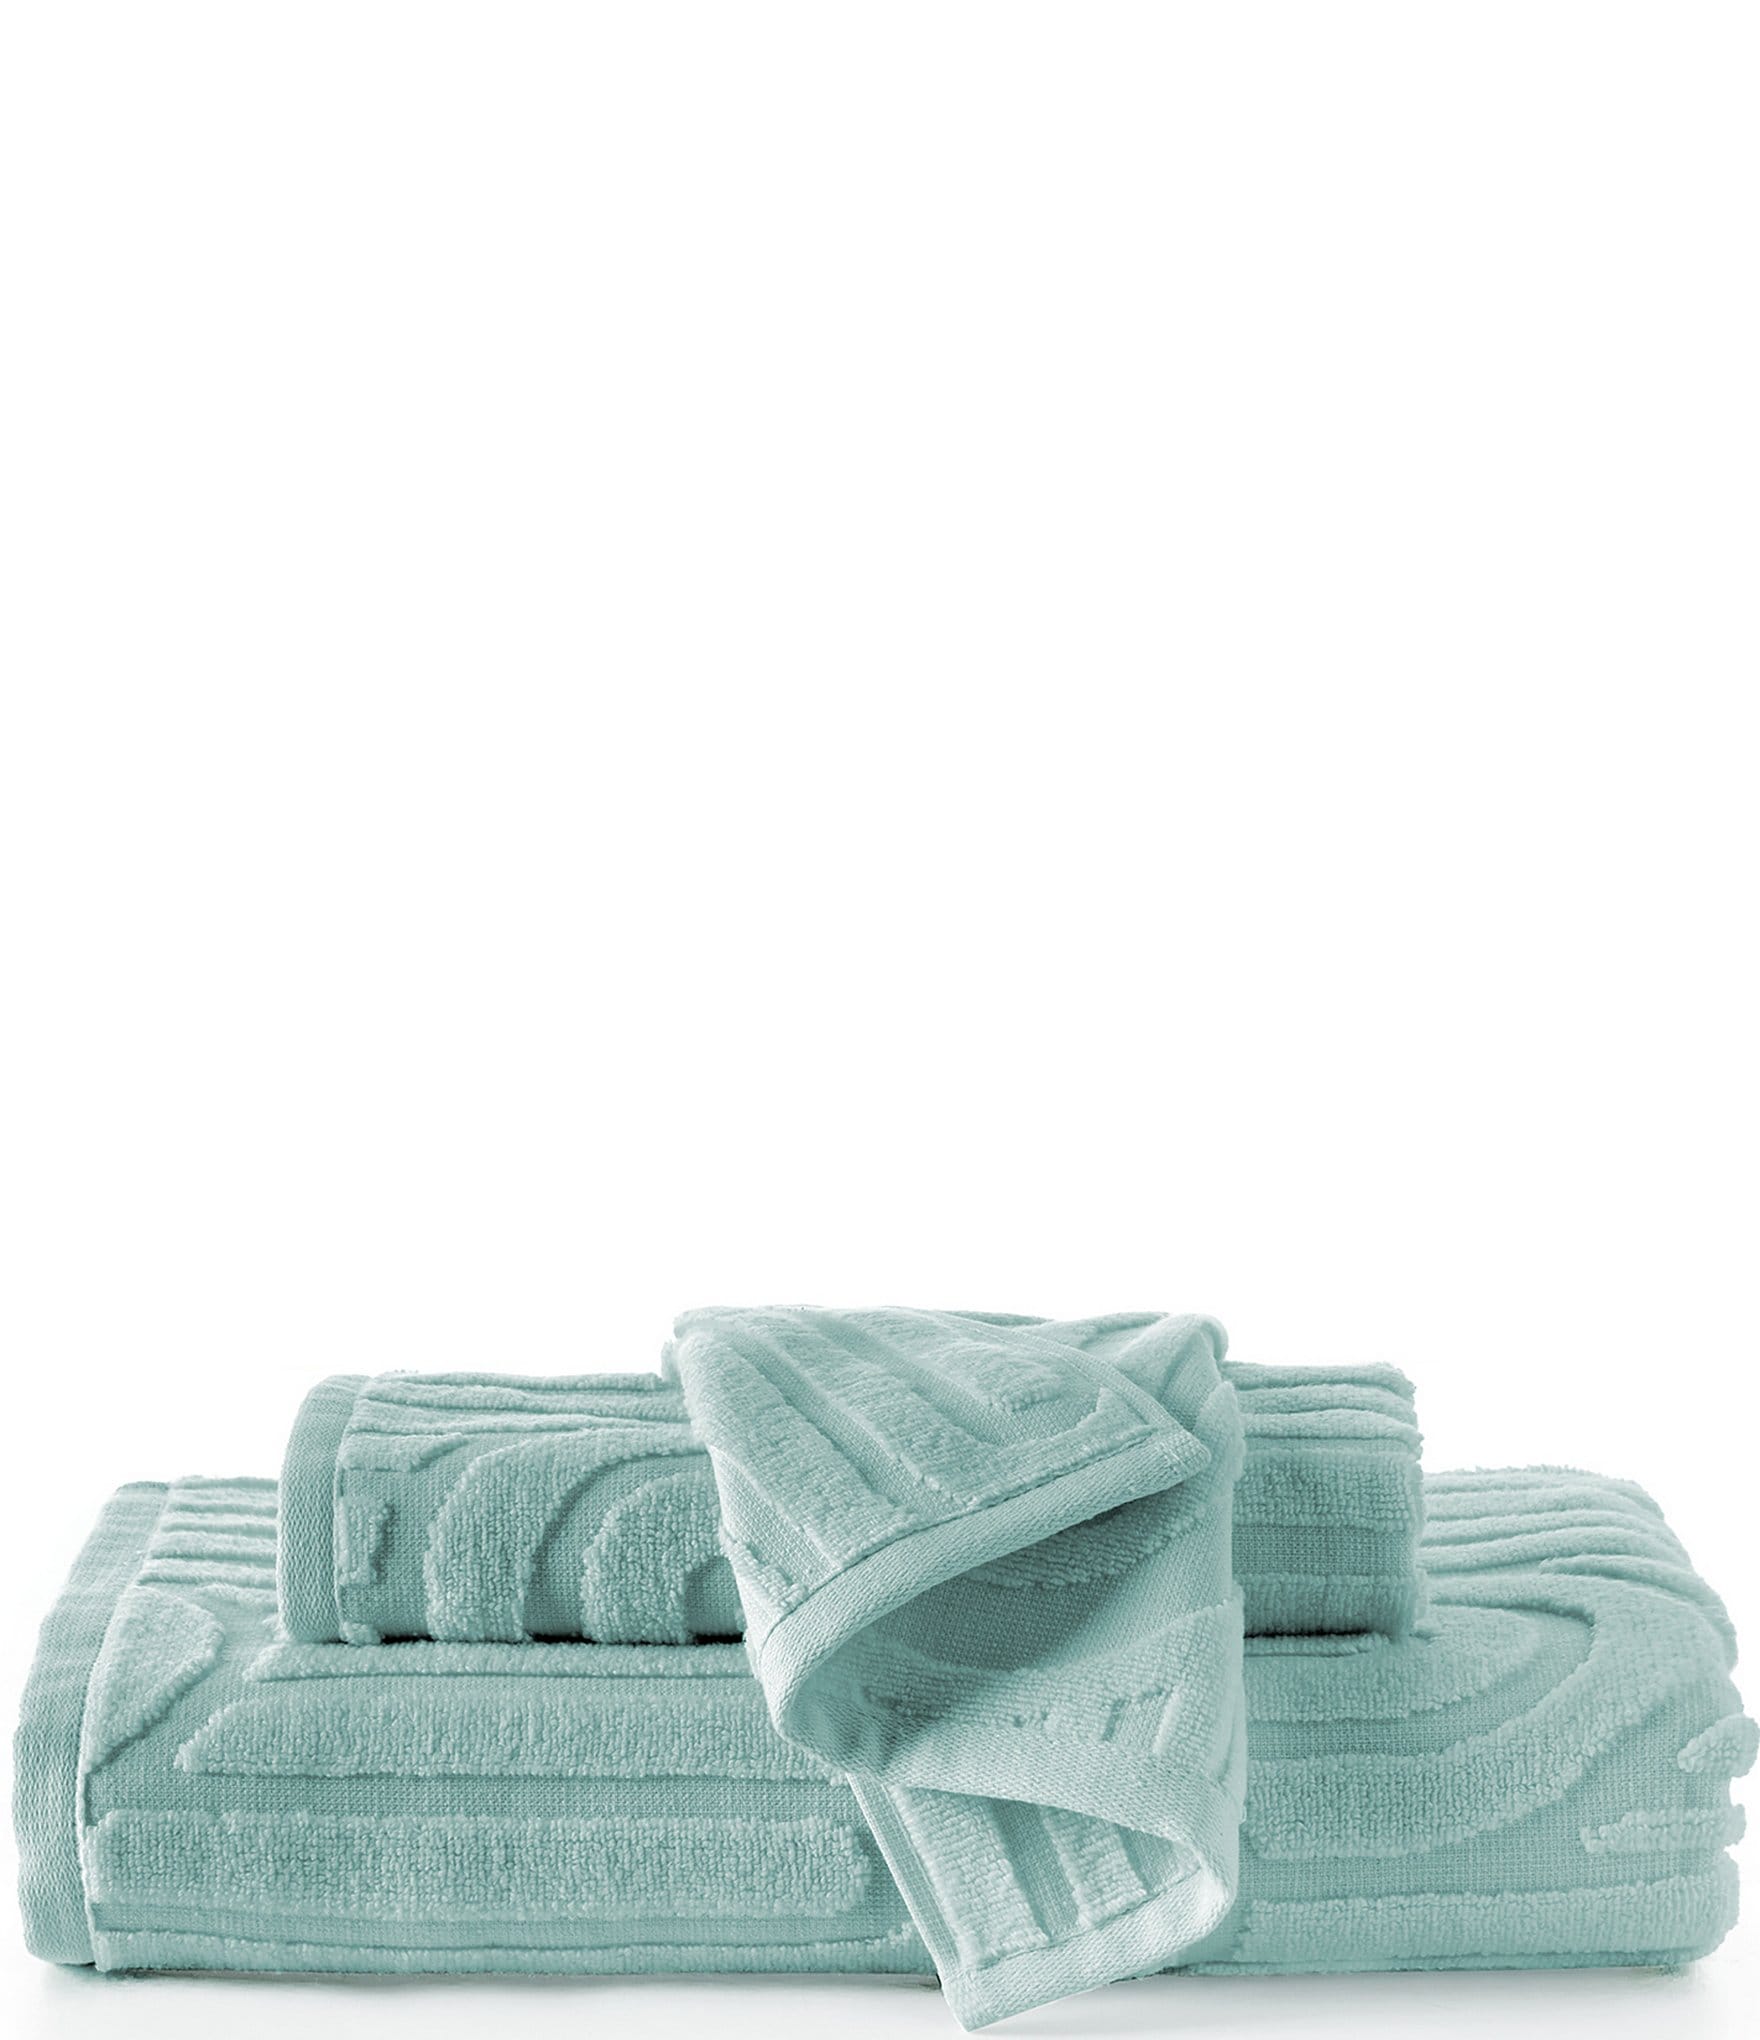 ugg cotton: Bath Towels, Shower Curtains & Bath Accessories